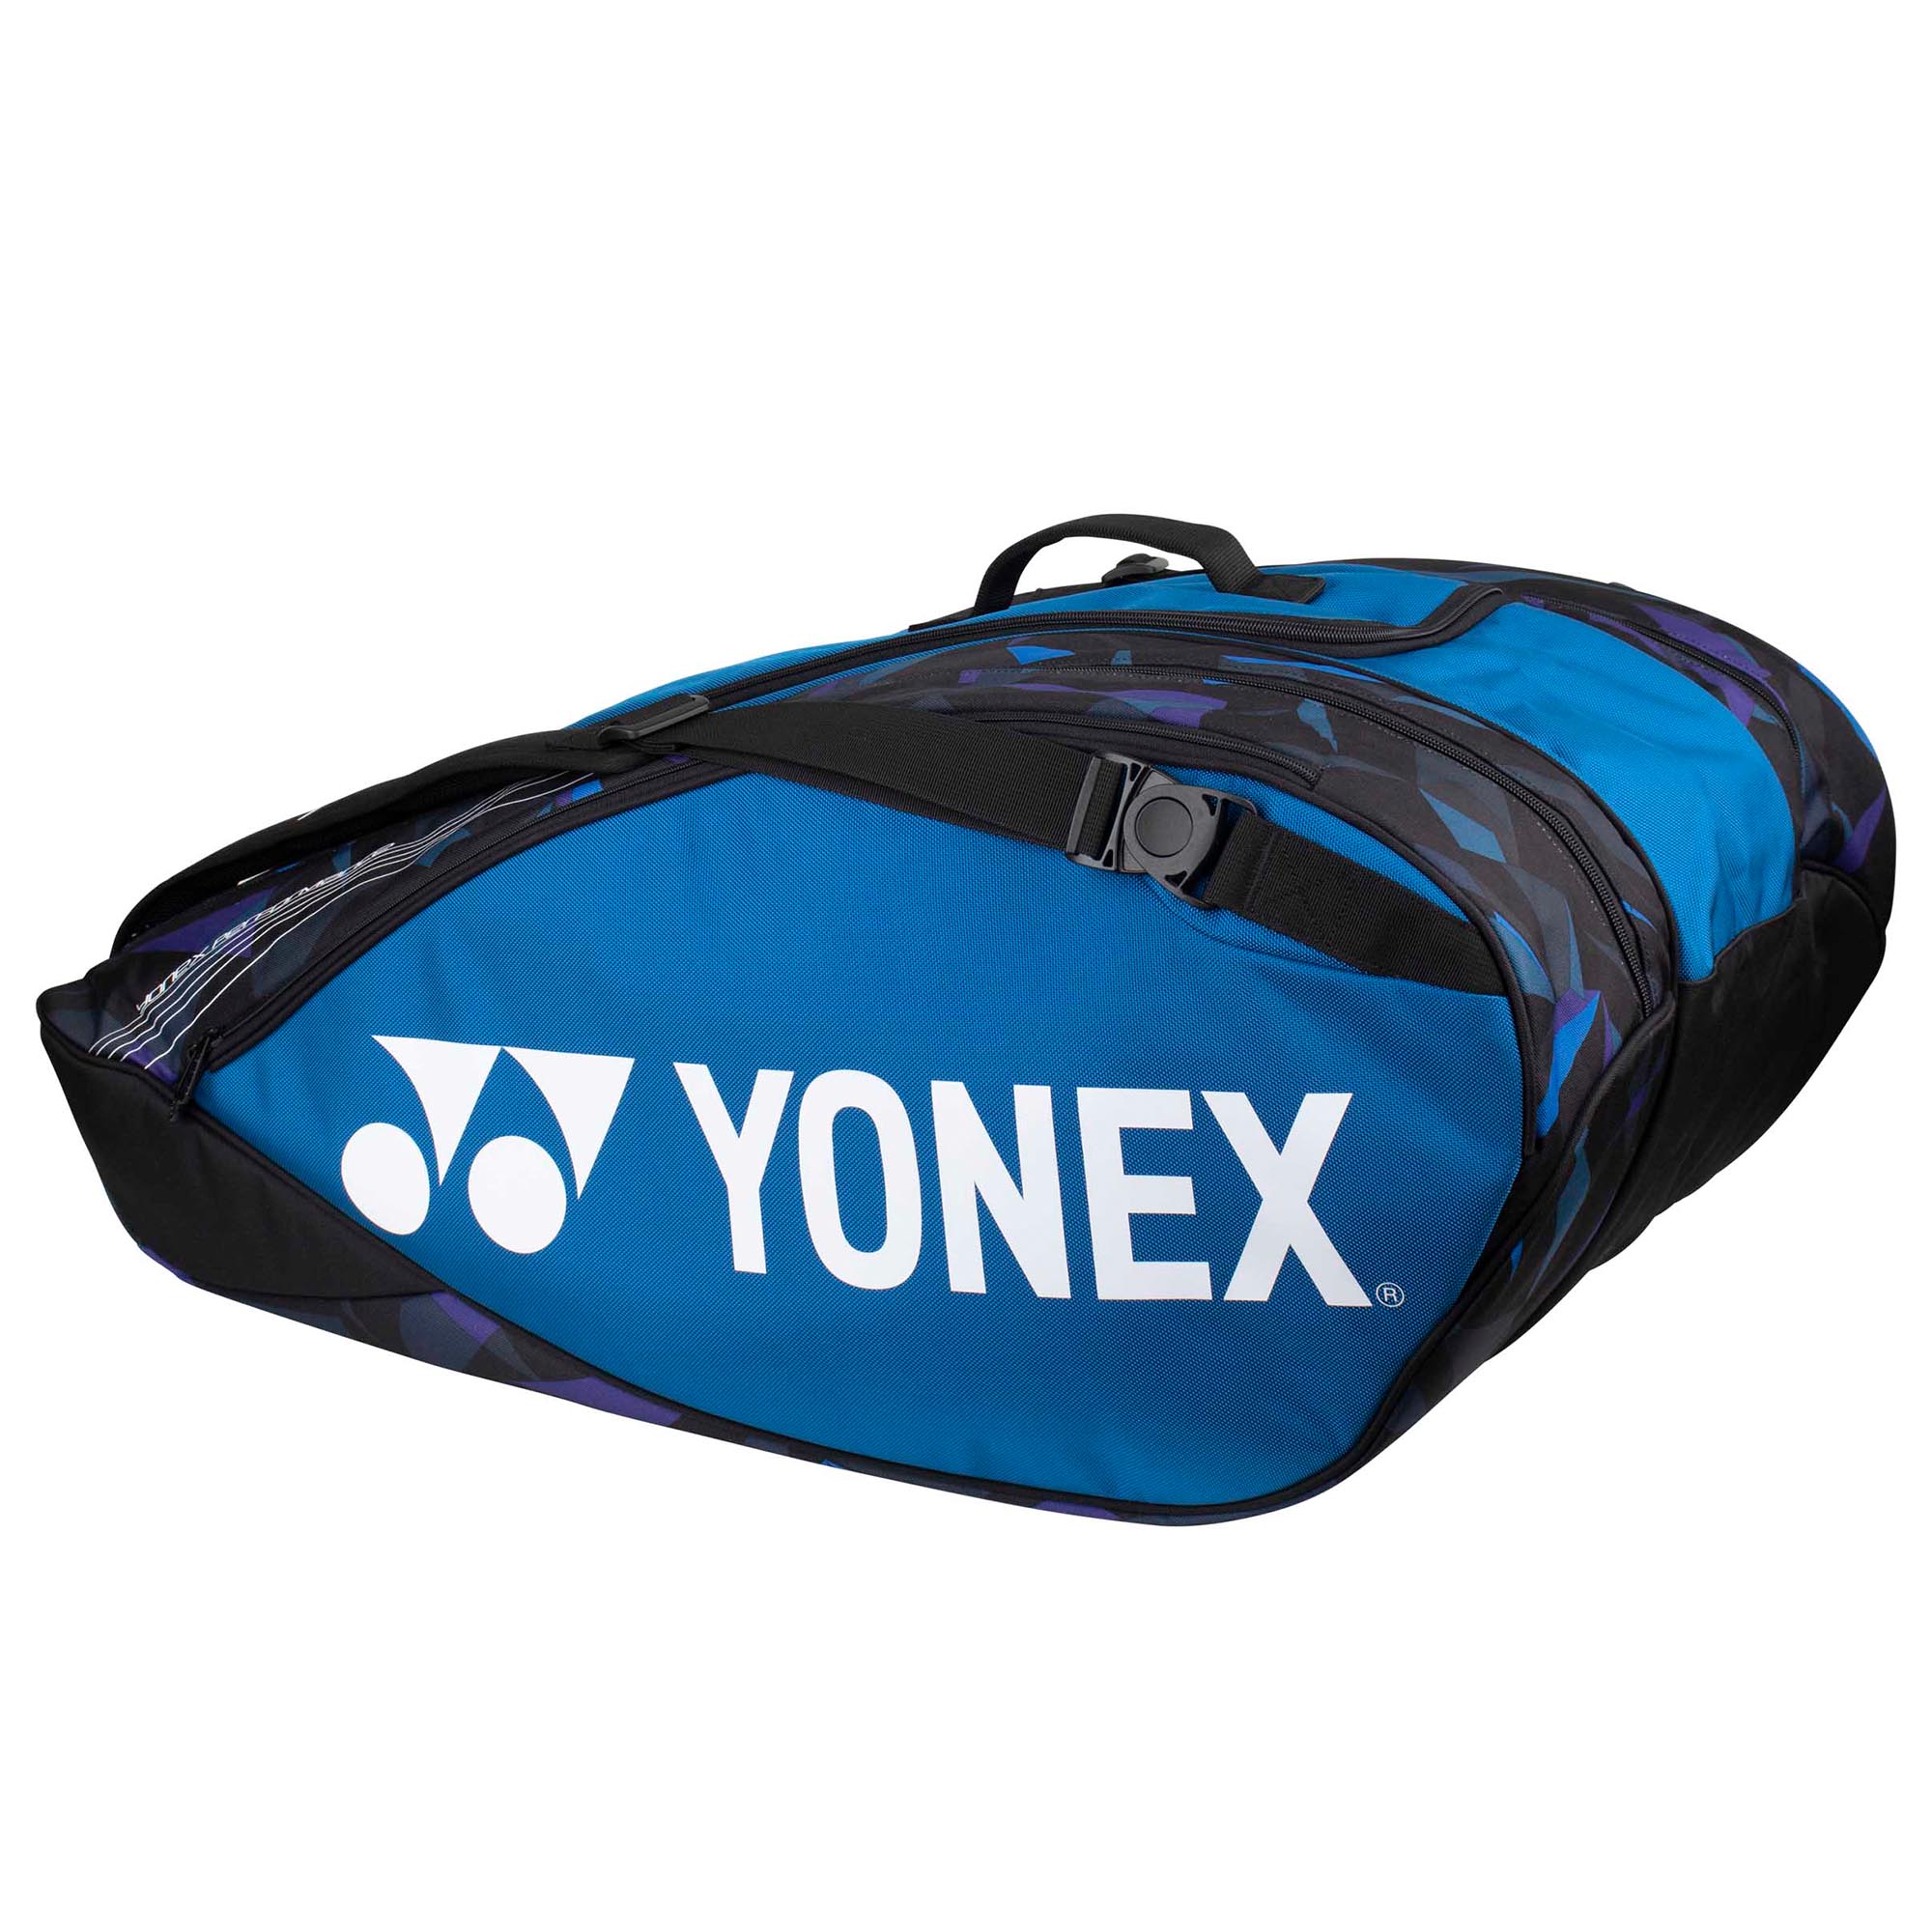 Yonex 922212 Pro 12 Racket Bag